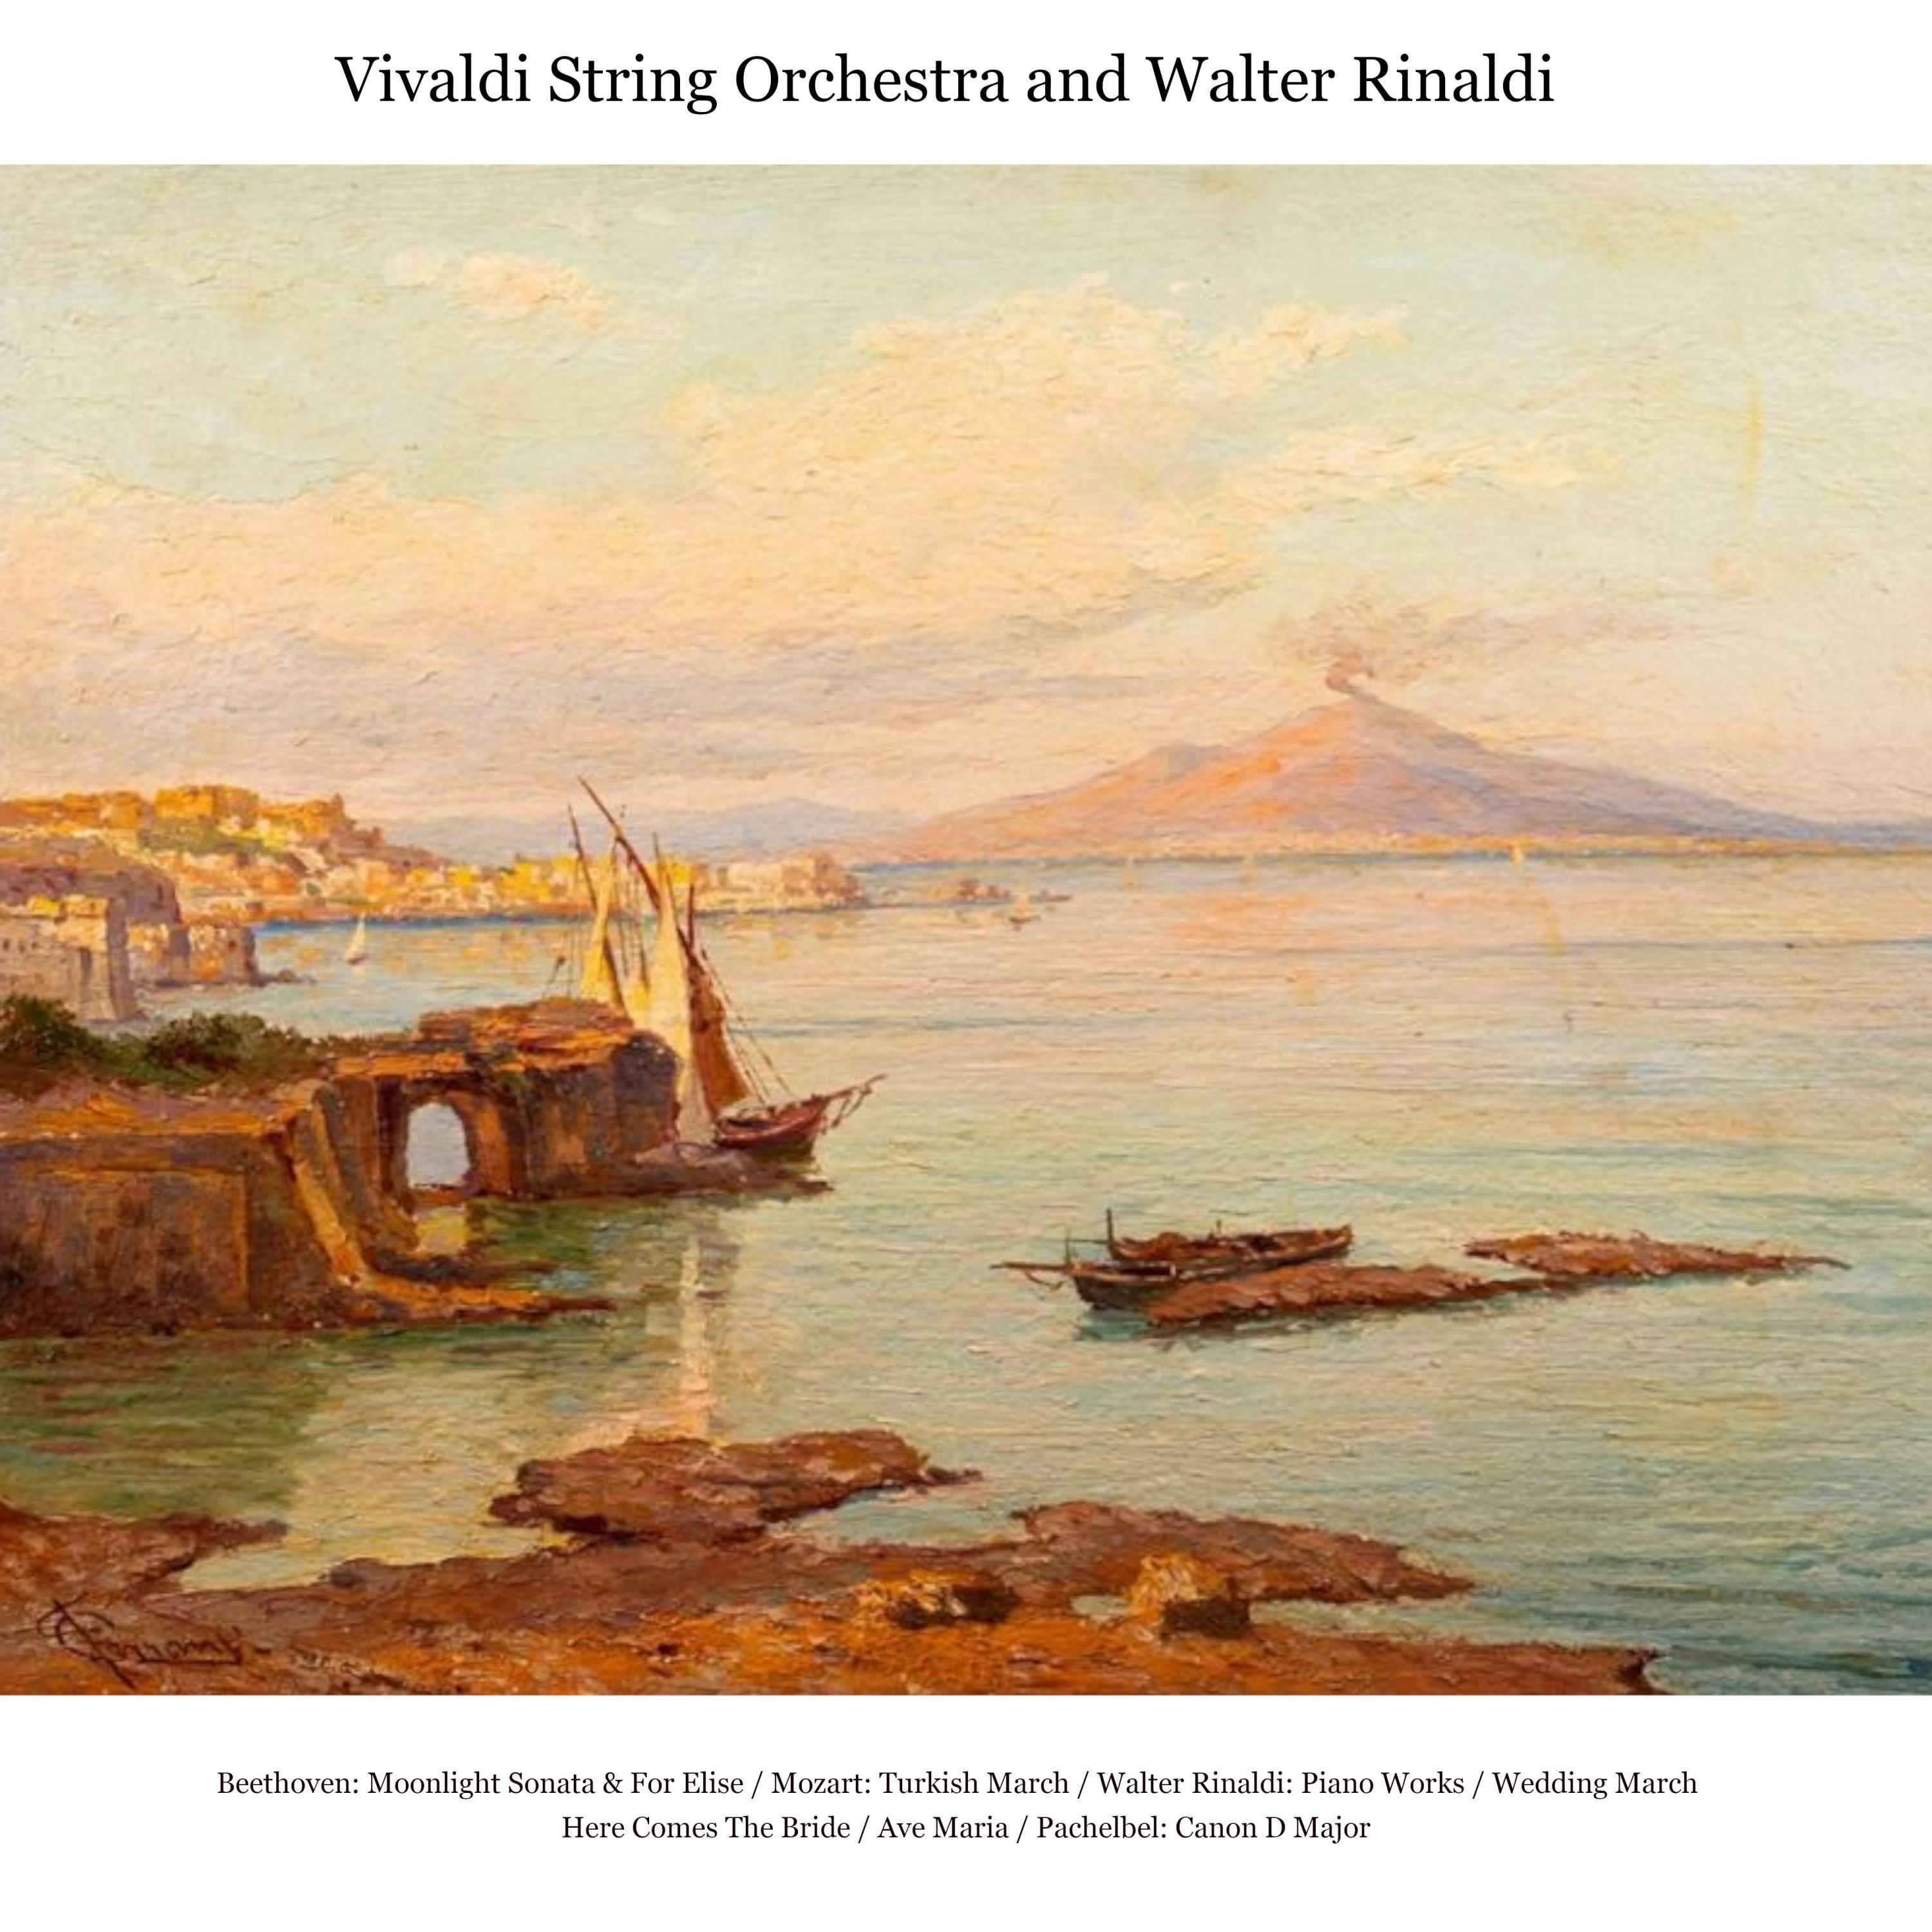 Walter Rinaldi - Wedding March for Organ, from A Midsummer Night's Dream: Wedding March